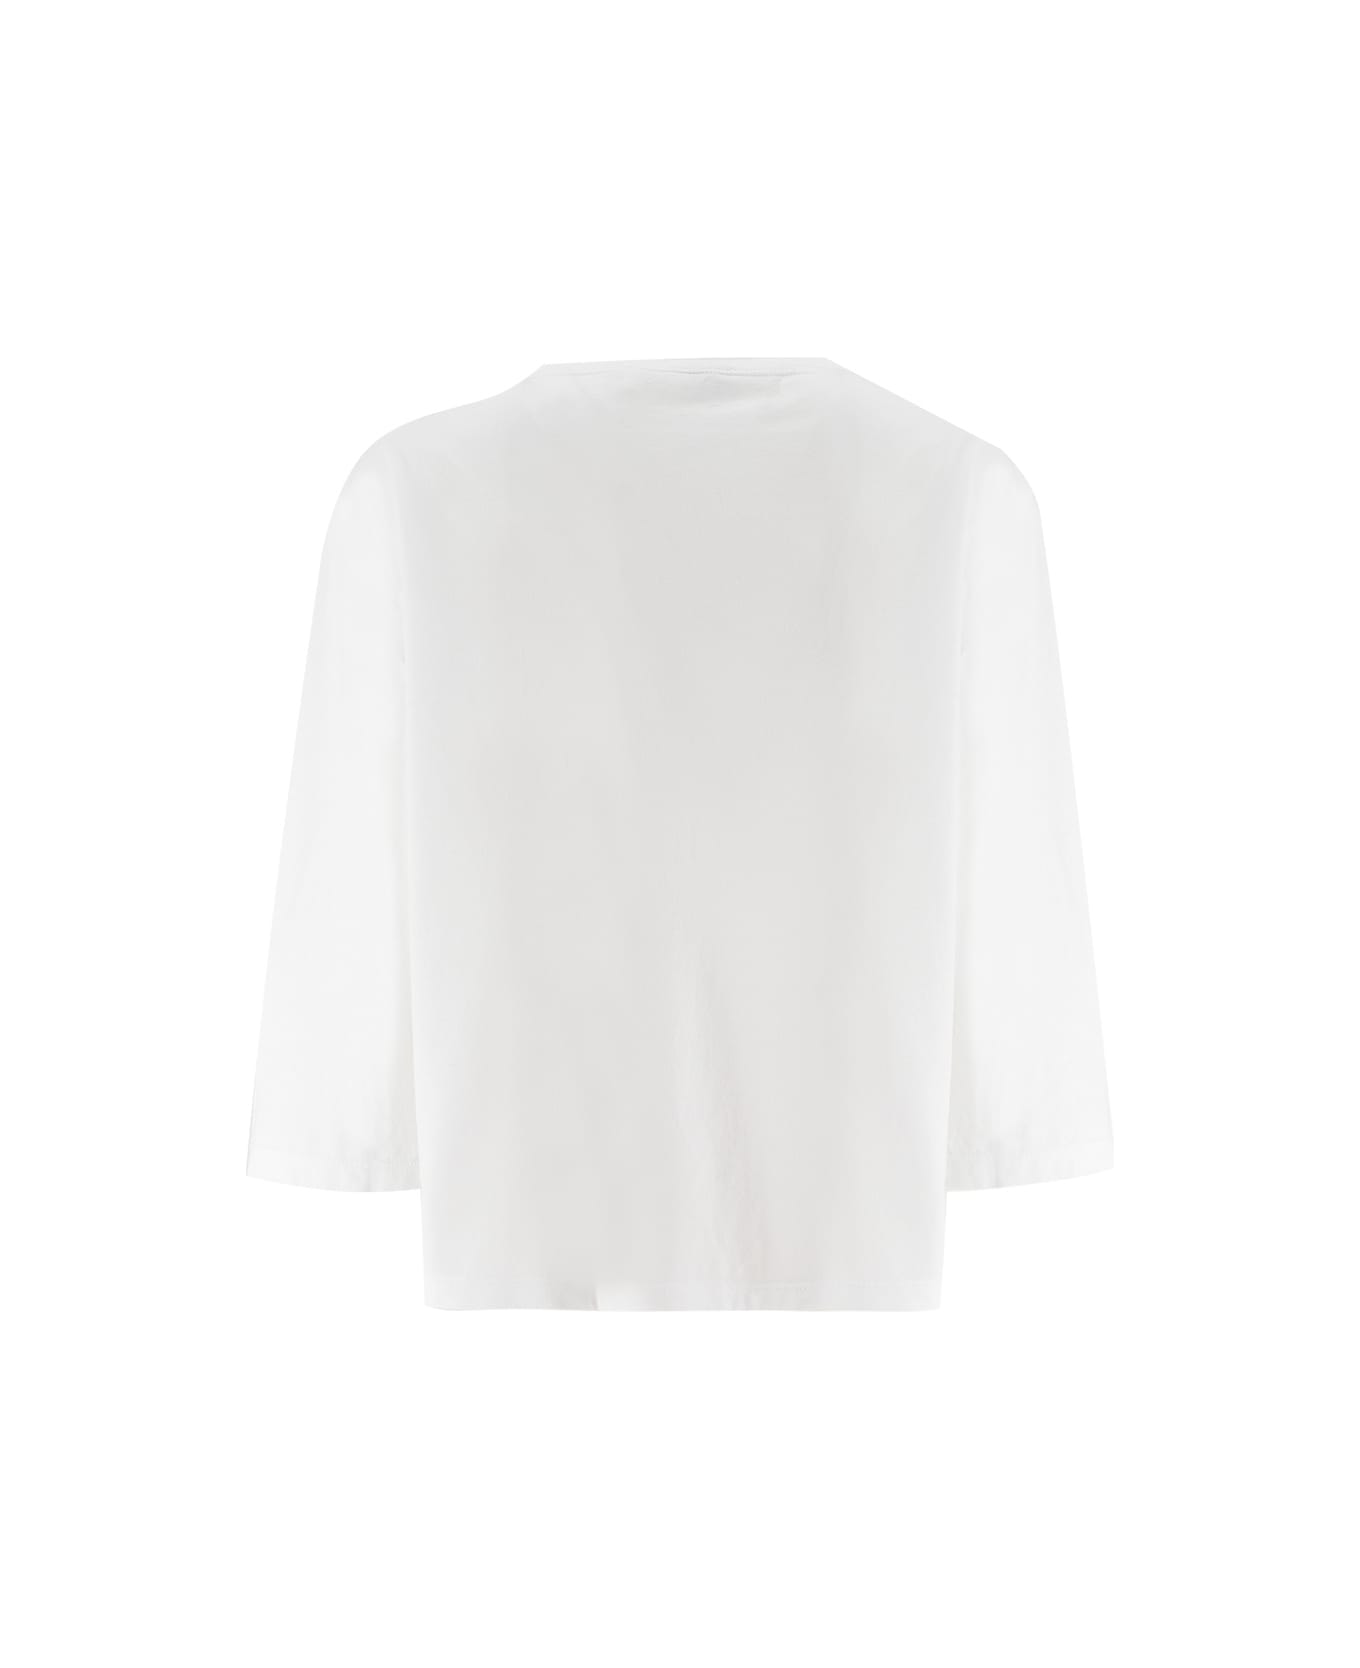 Aspesi Sweater - BIANCO/WHITE